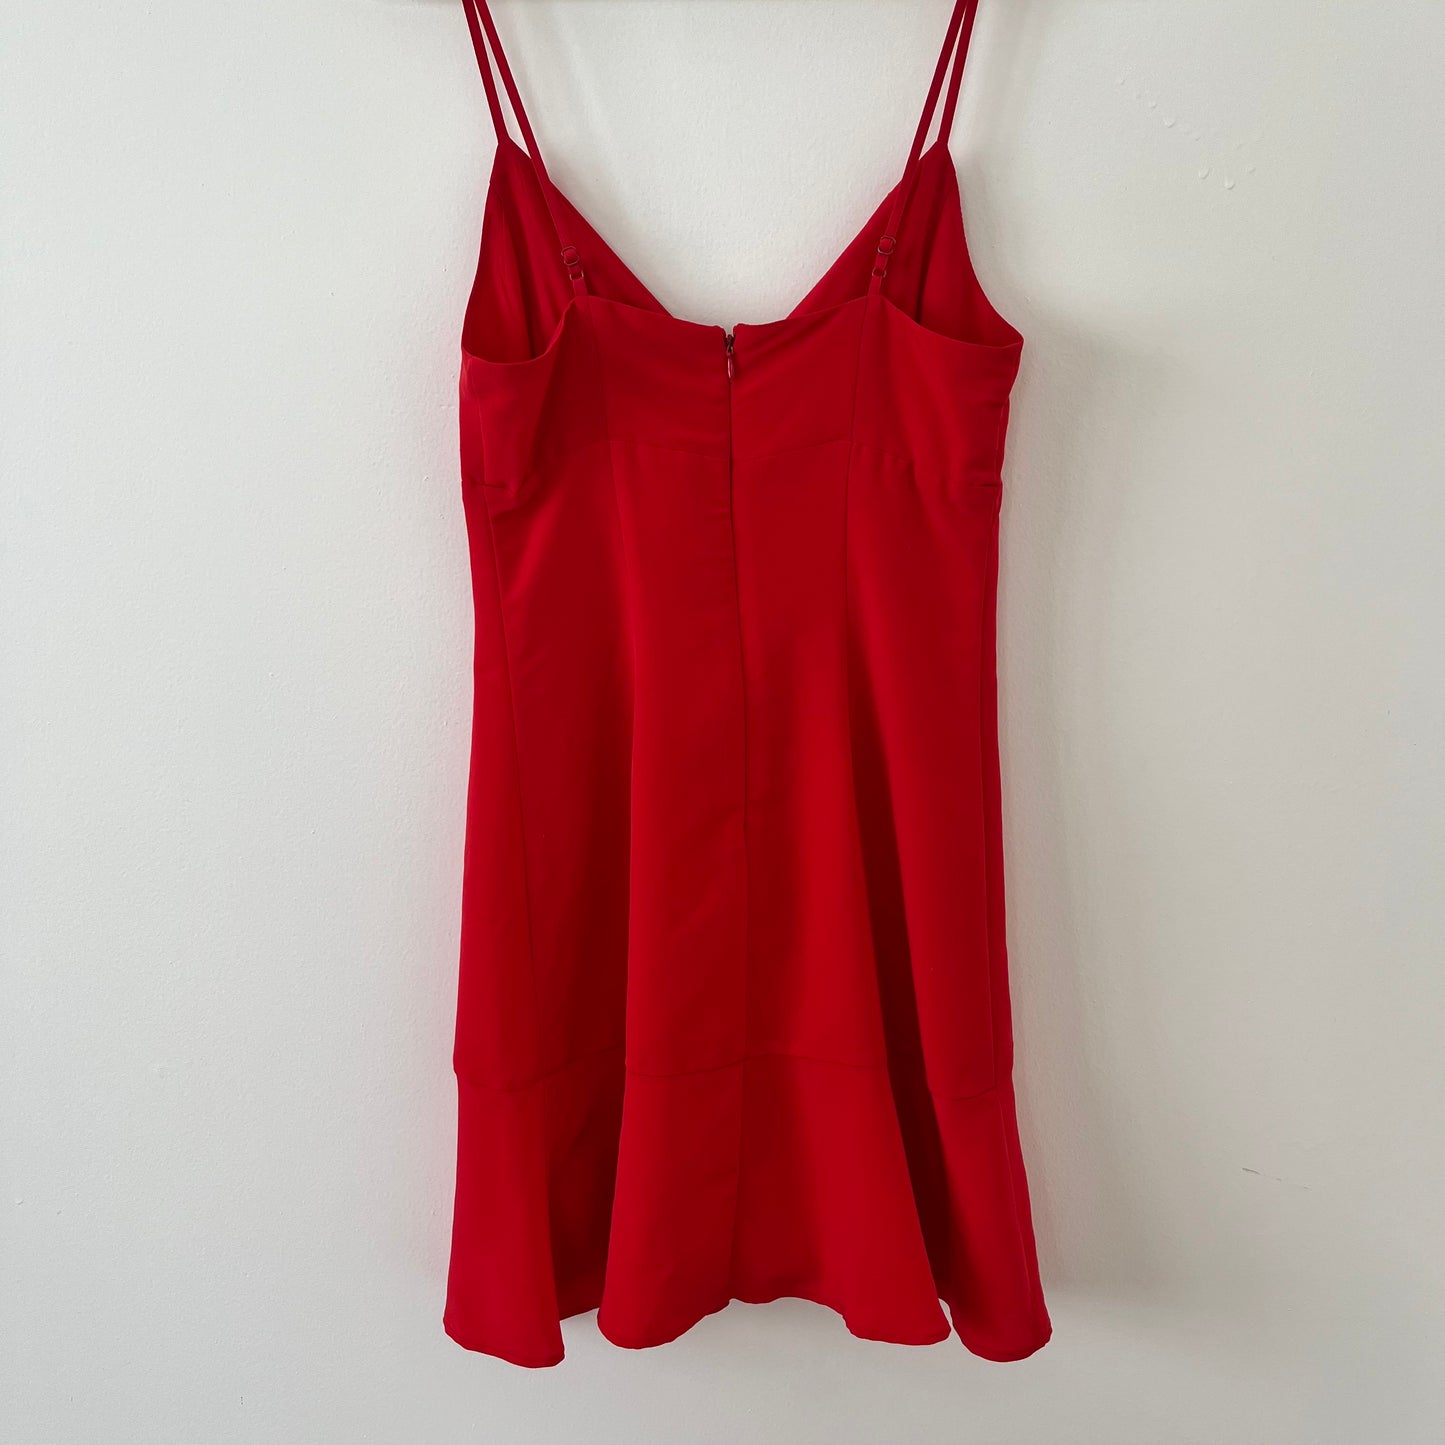 Strappy Red Dress (XS)